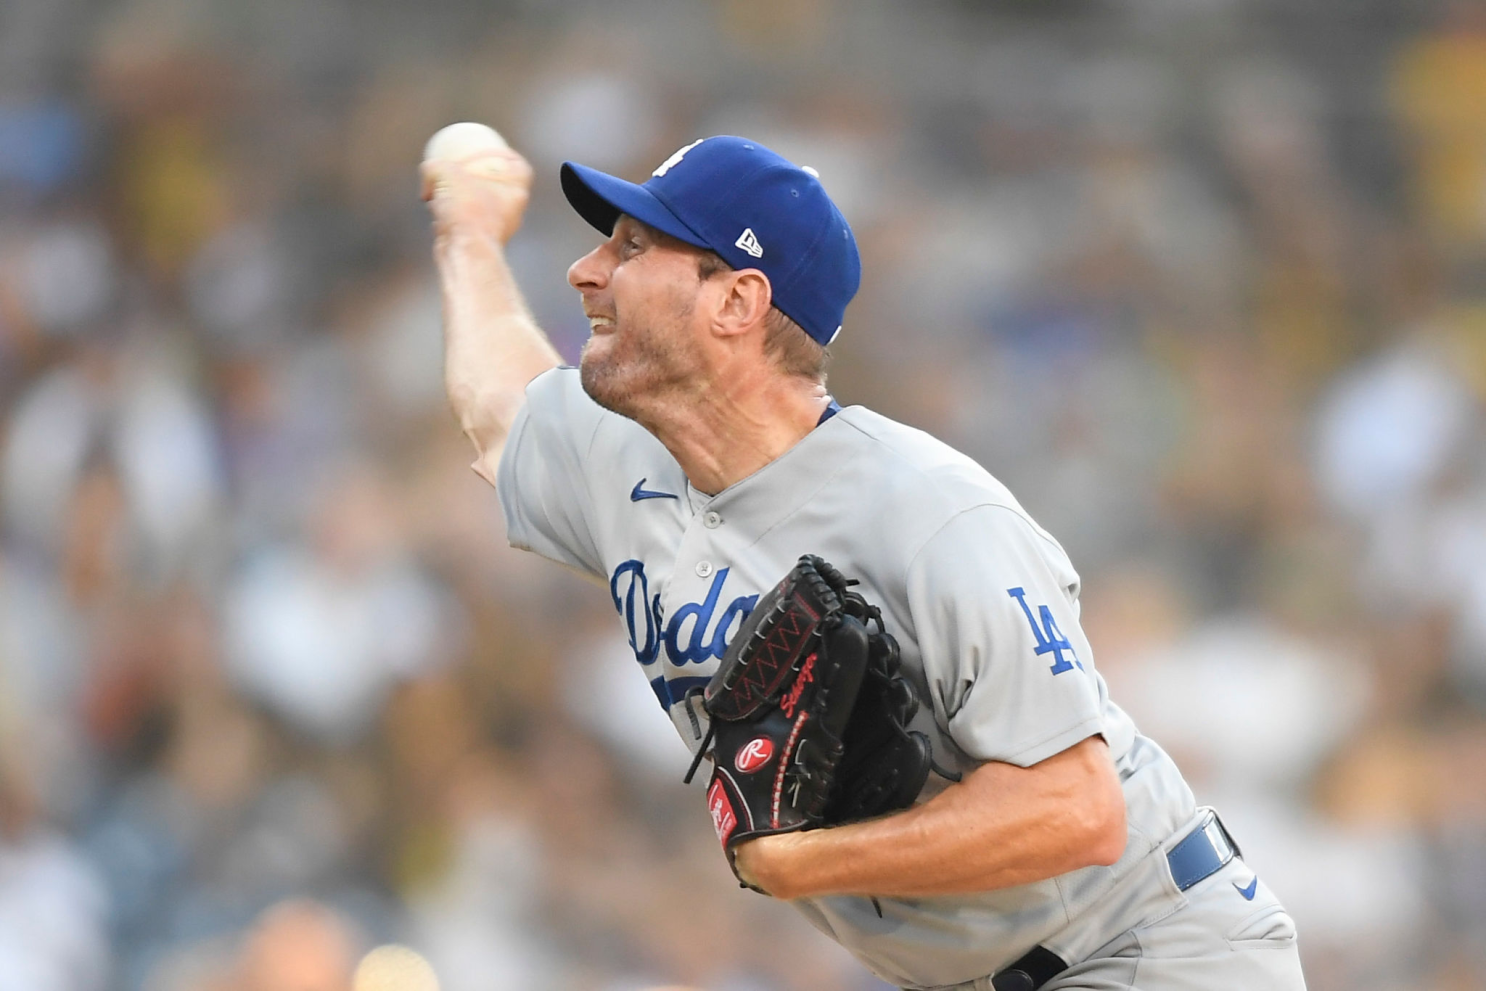 SportsNet LA on X: #Dodgers baseball returns next week! Here's a